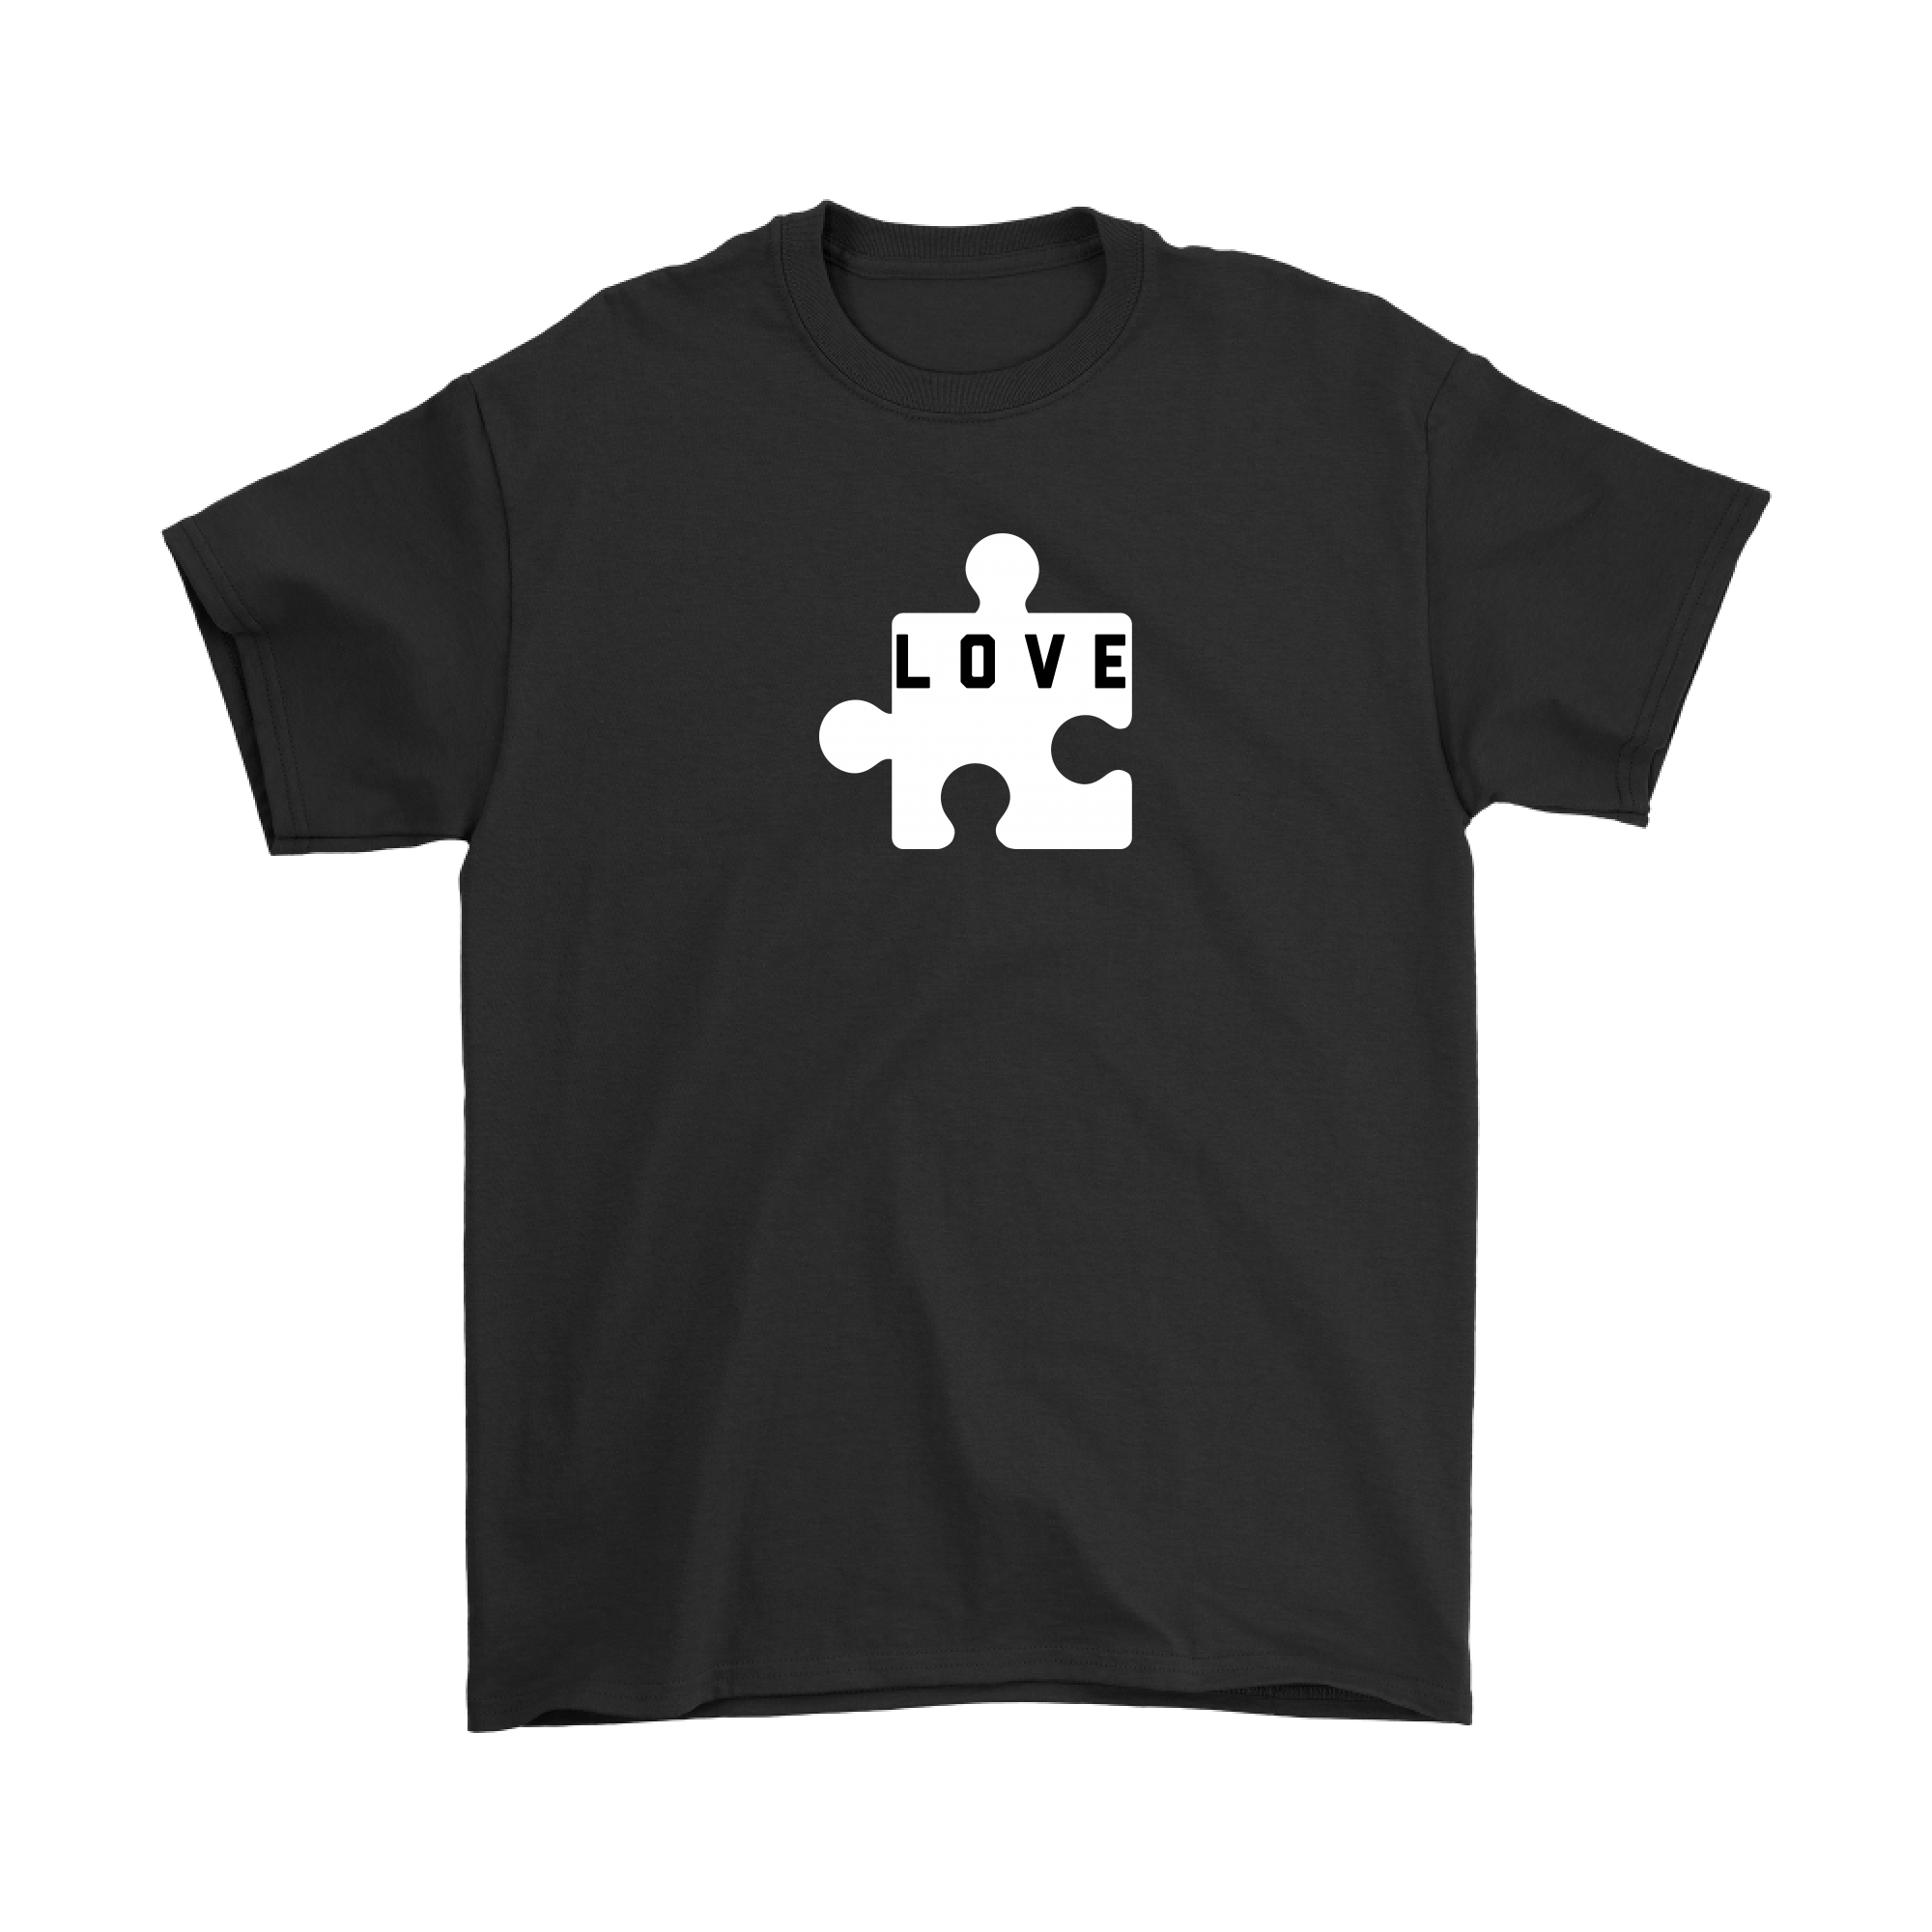 One+Love Combo Adult T-shirt Set